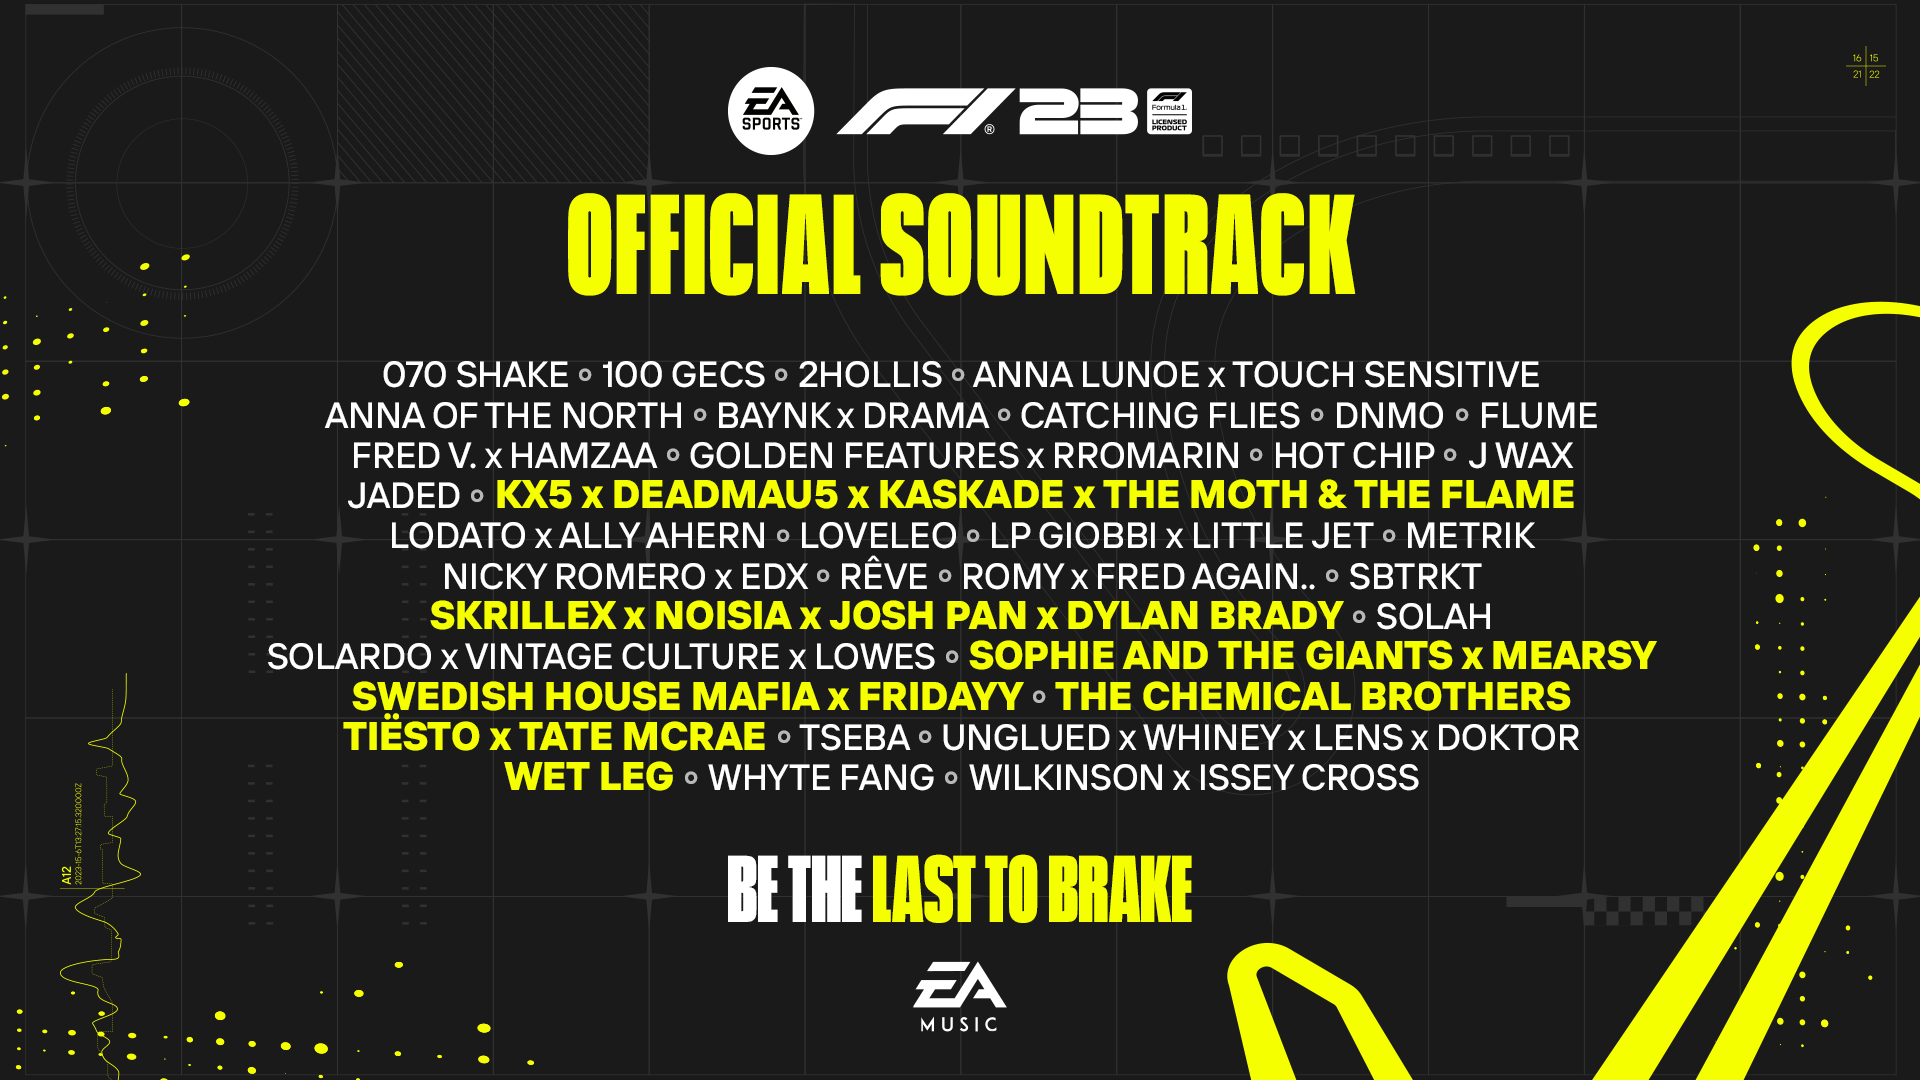 EA SPORTS F1 23 presentó su banda sonora